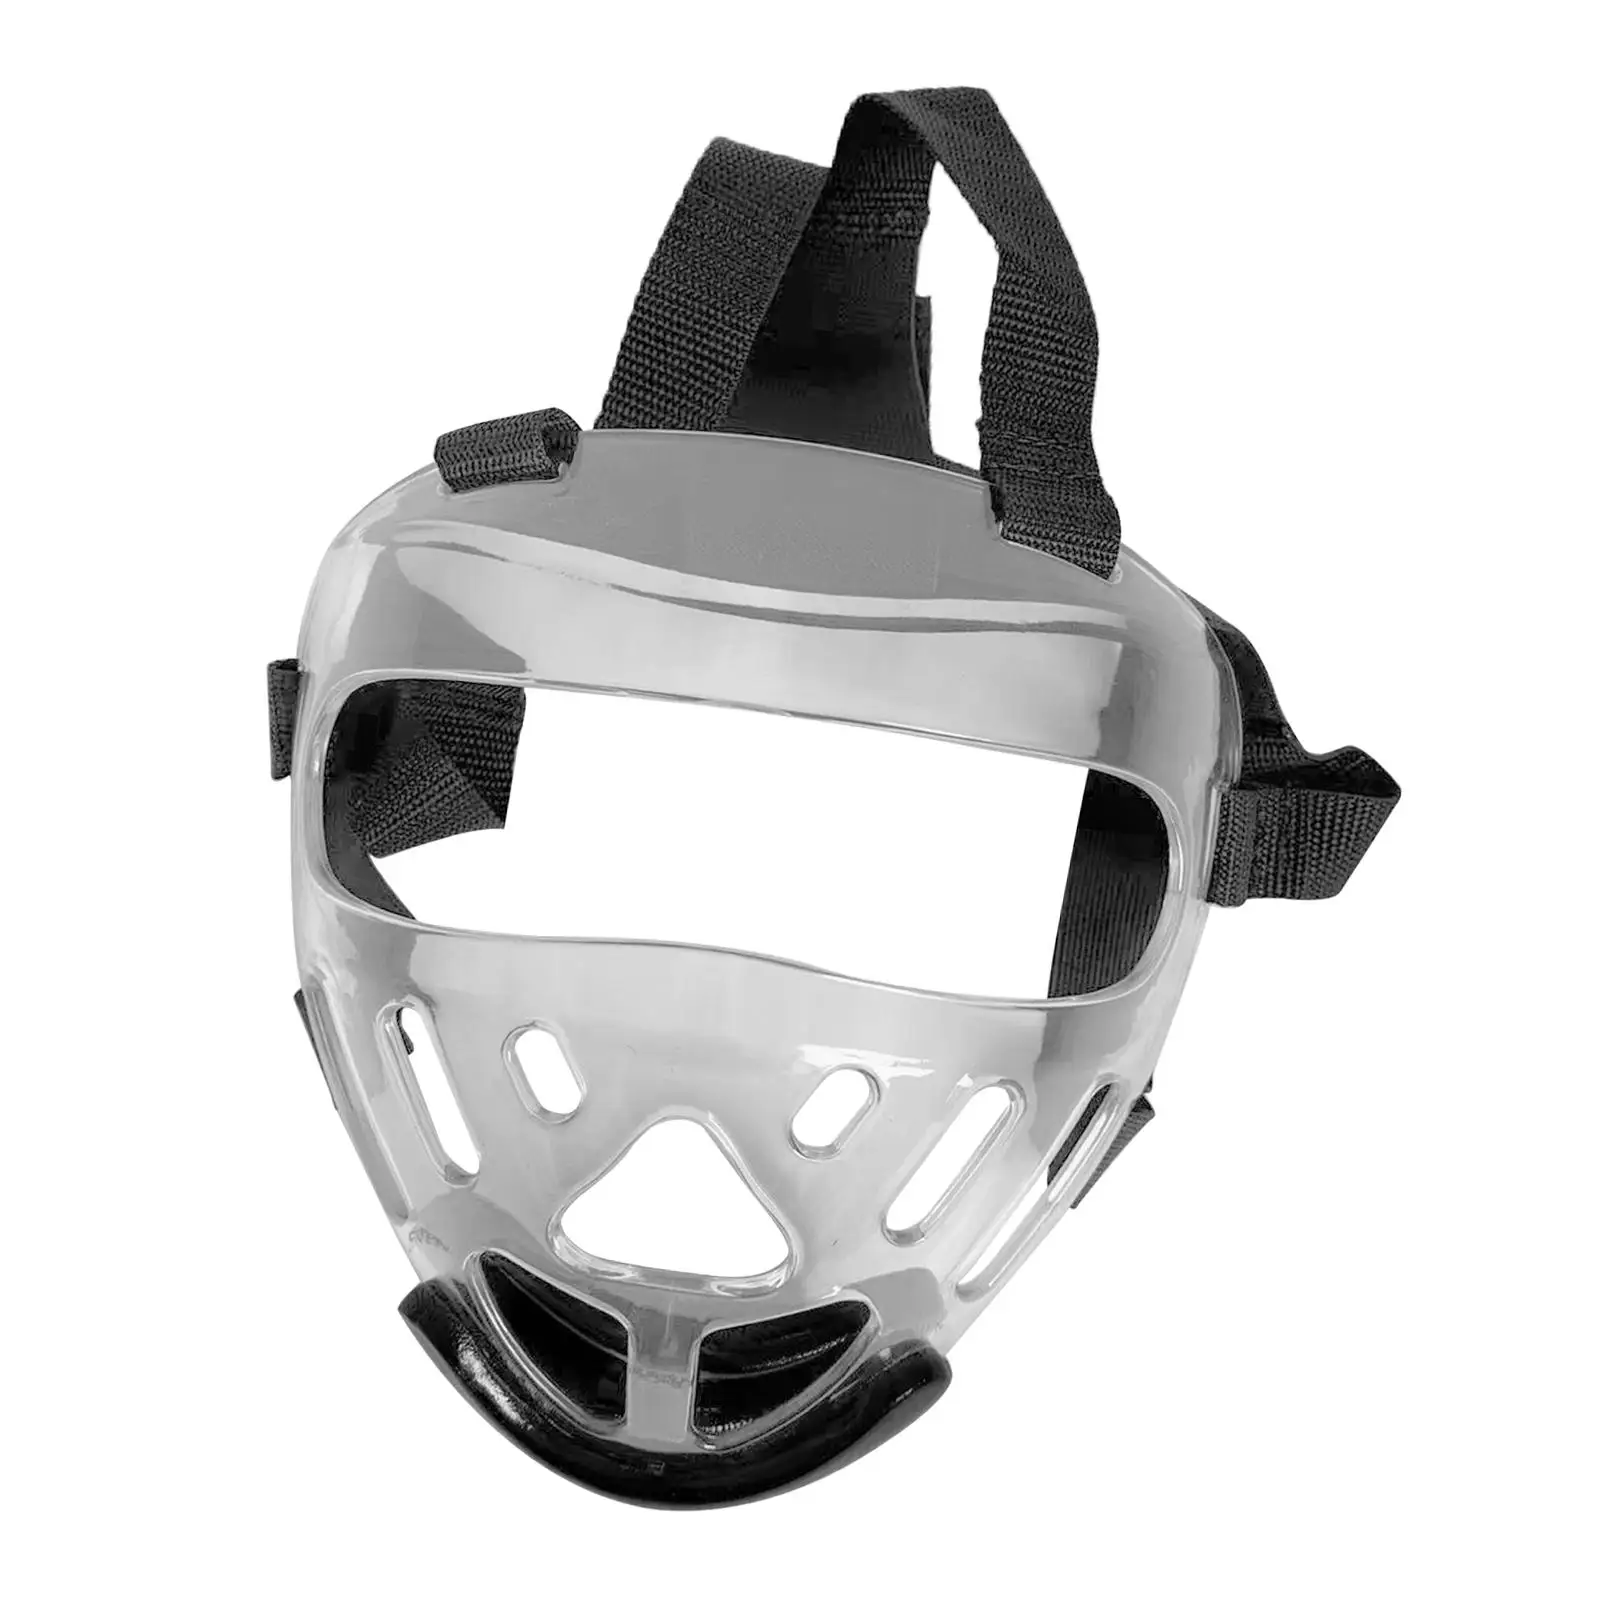 Taekwondo Mask Kids Taekwondo Face Shield Face Protection Cover Taekwondo Sparring Mask Clear Face Guard for Martial Arts Boxing